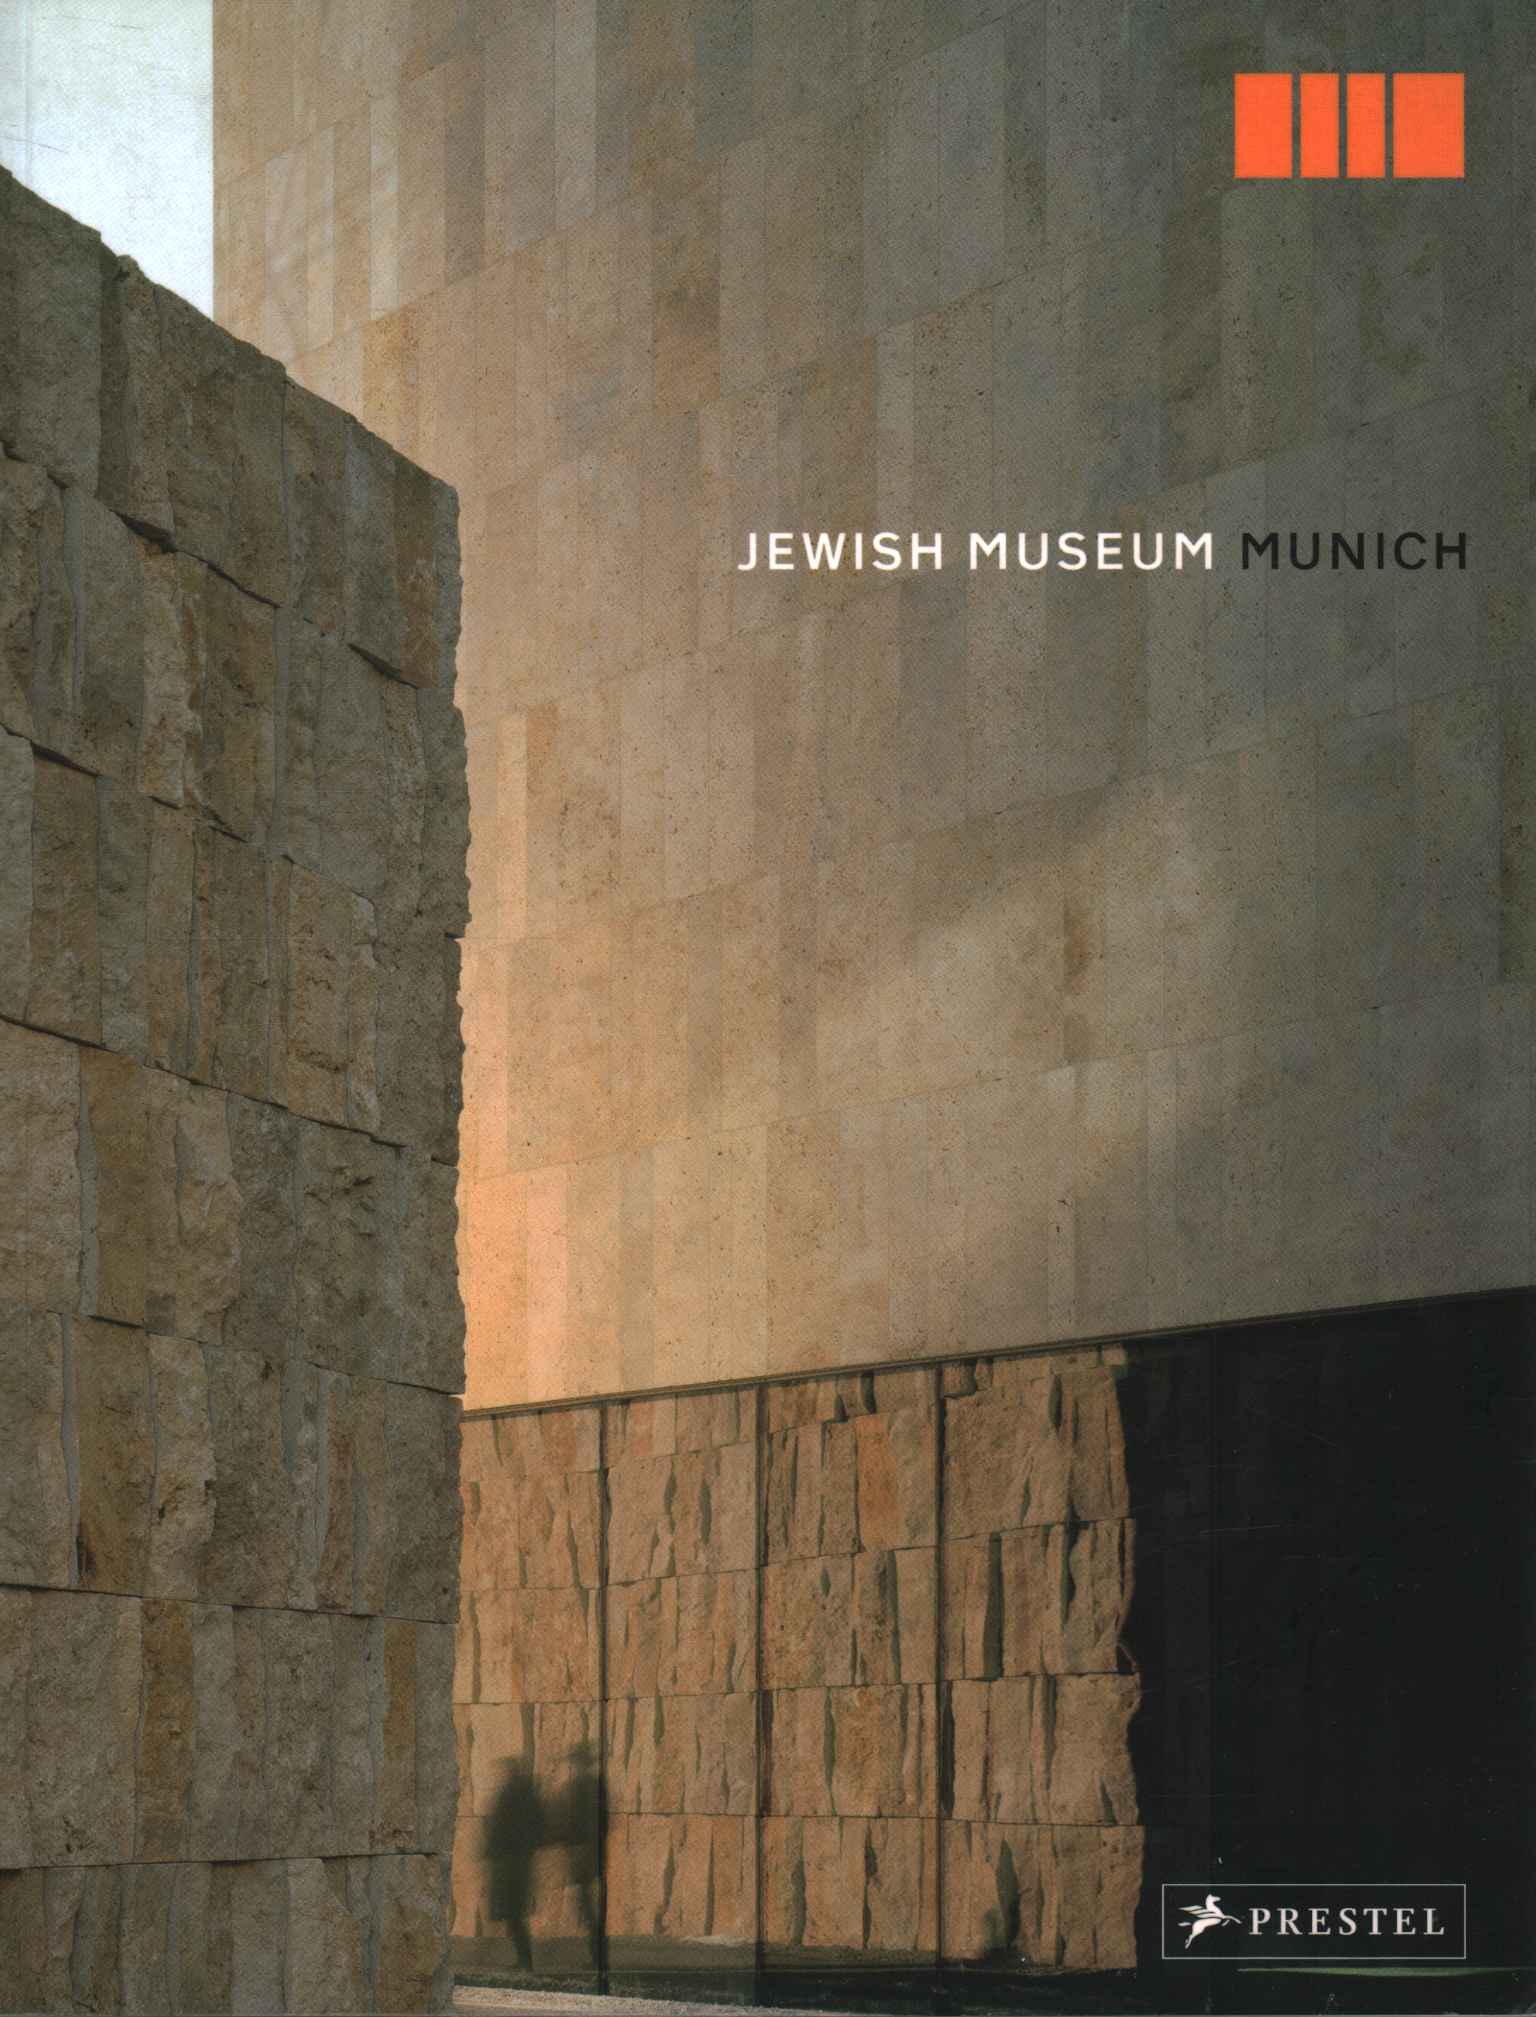 Museo Judío de Múnich. Jewisg%2, Museo Judío de Múnich. Judío%2